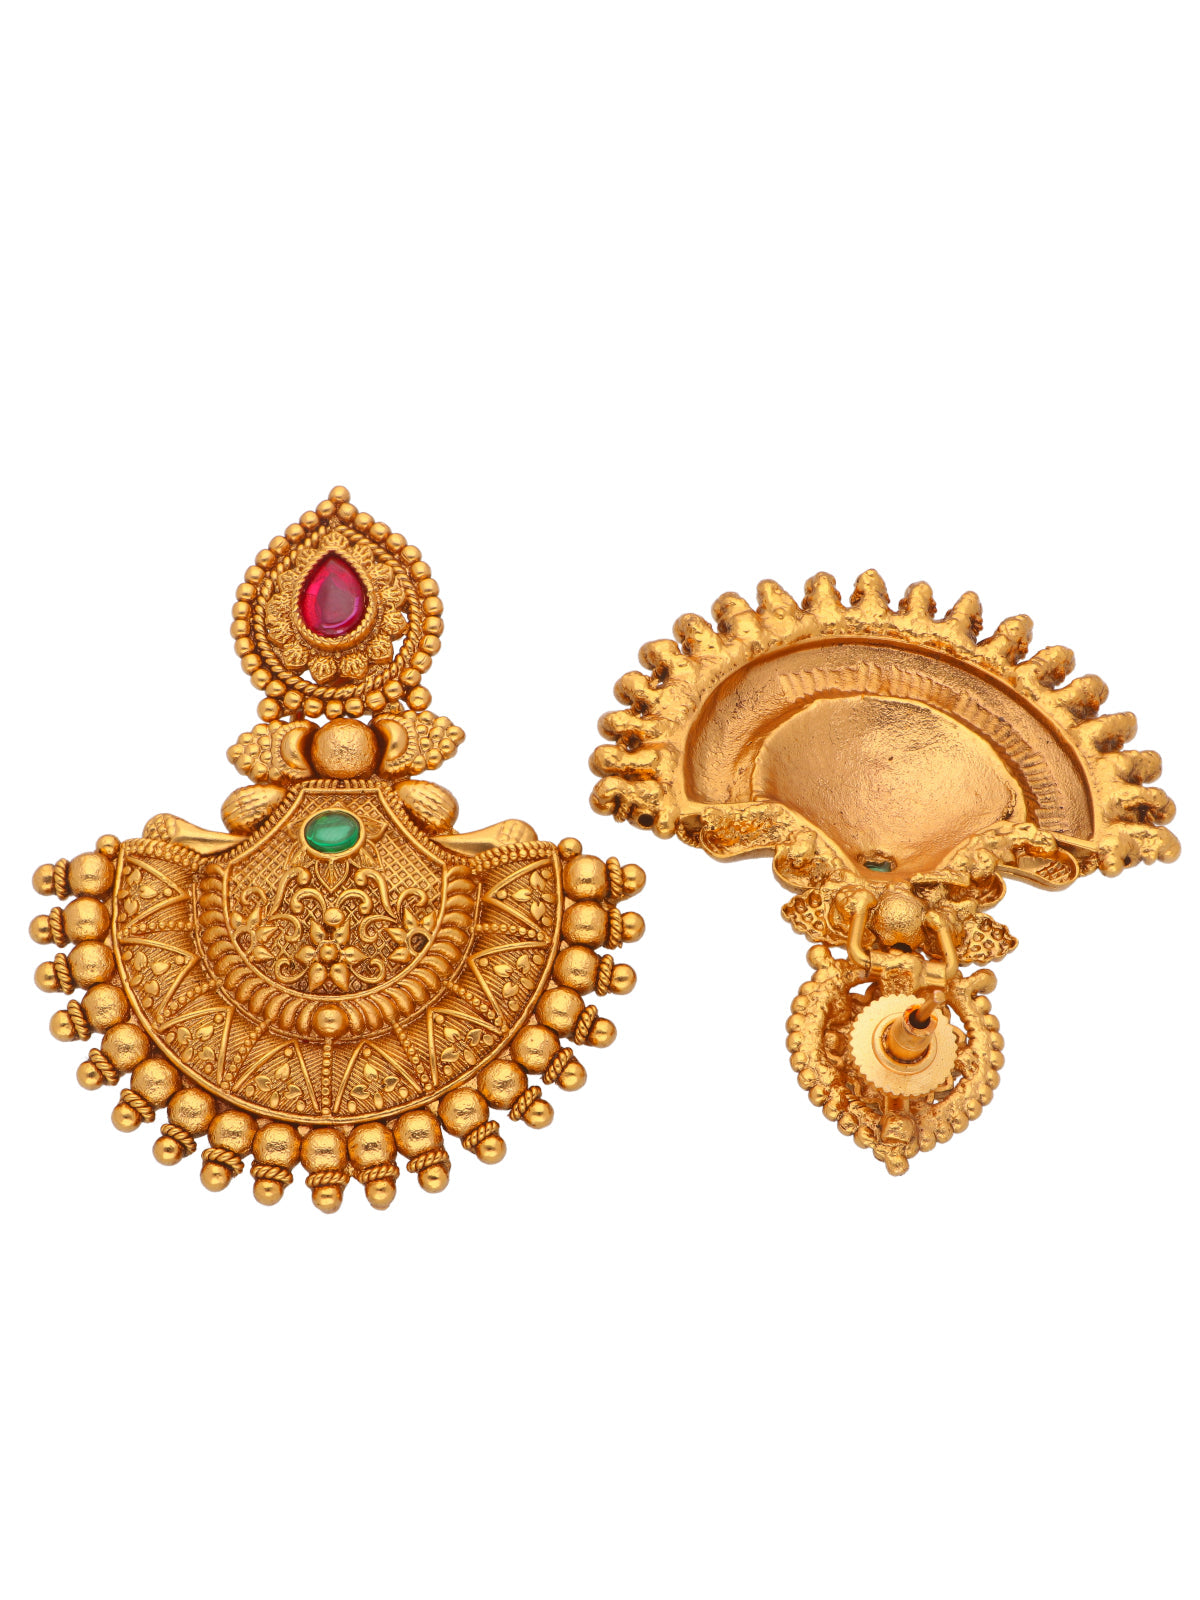 Light weight Gold Chandbali earrings | Art of Gold Jewellery, Coimbatore